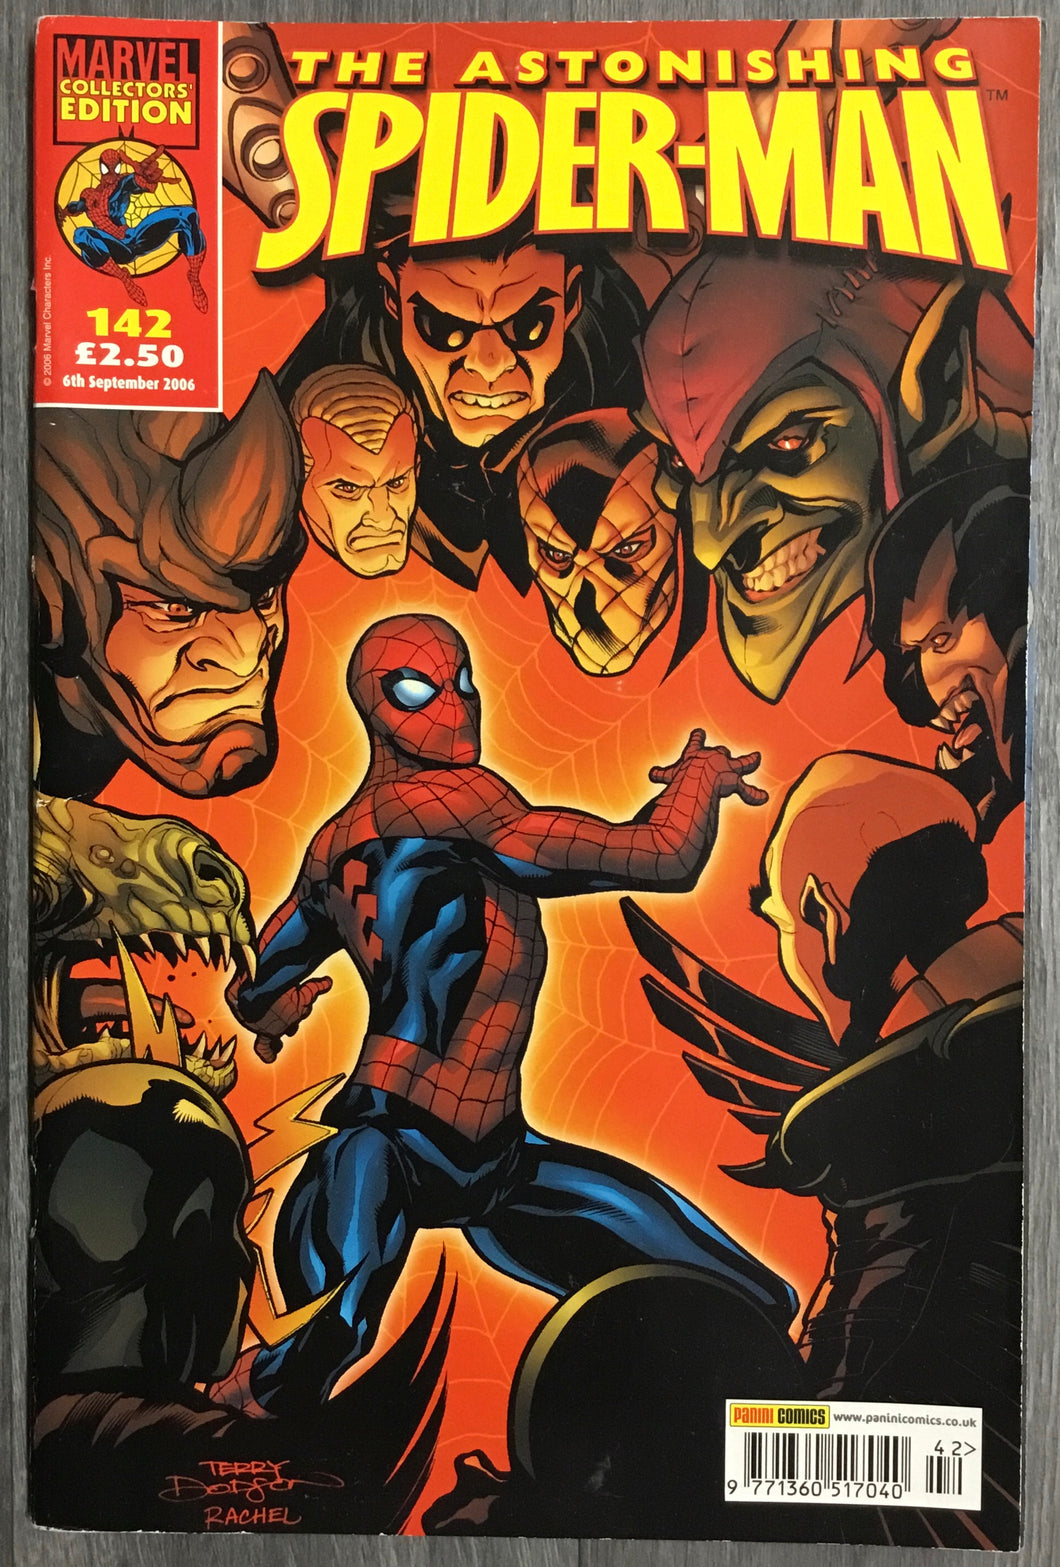 The Astonishing Spider-Man No. #142 2006 Marvel Panini Comics